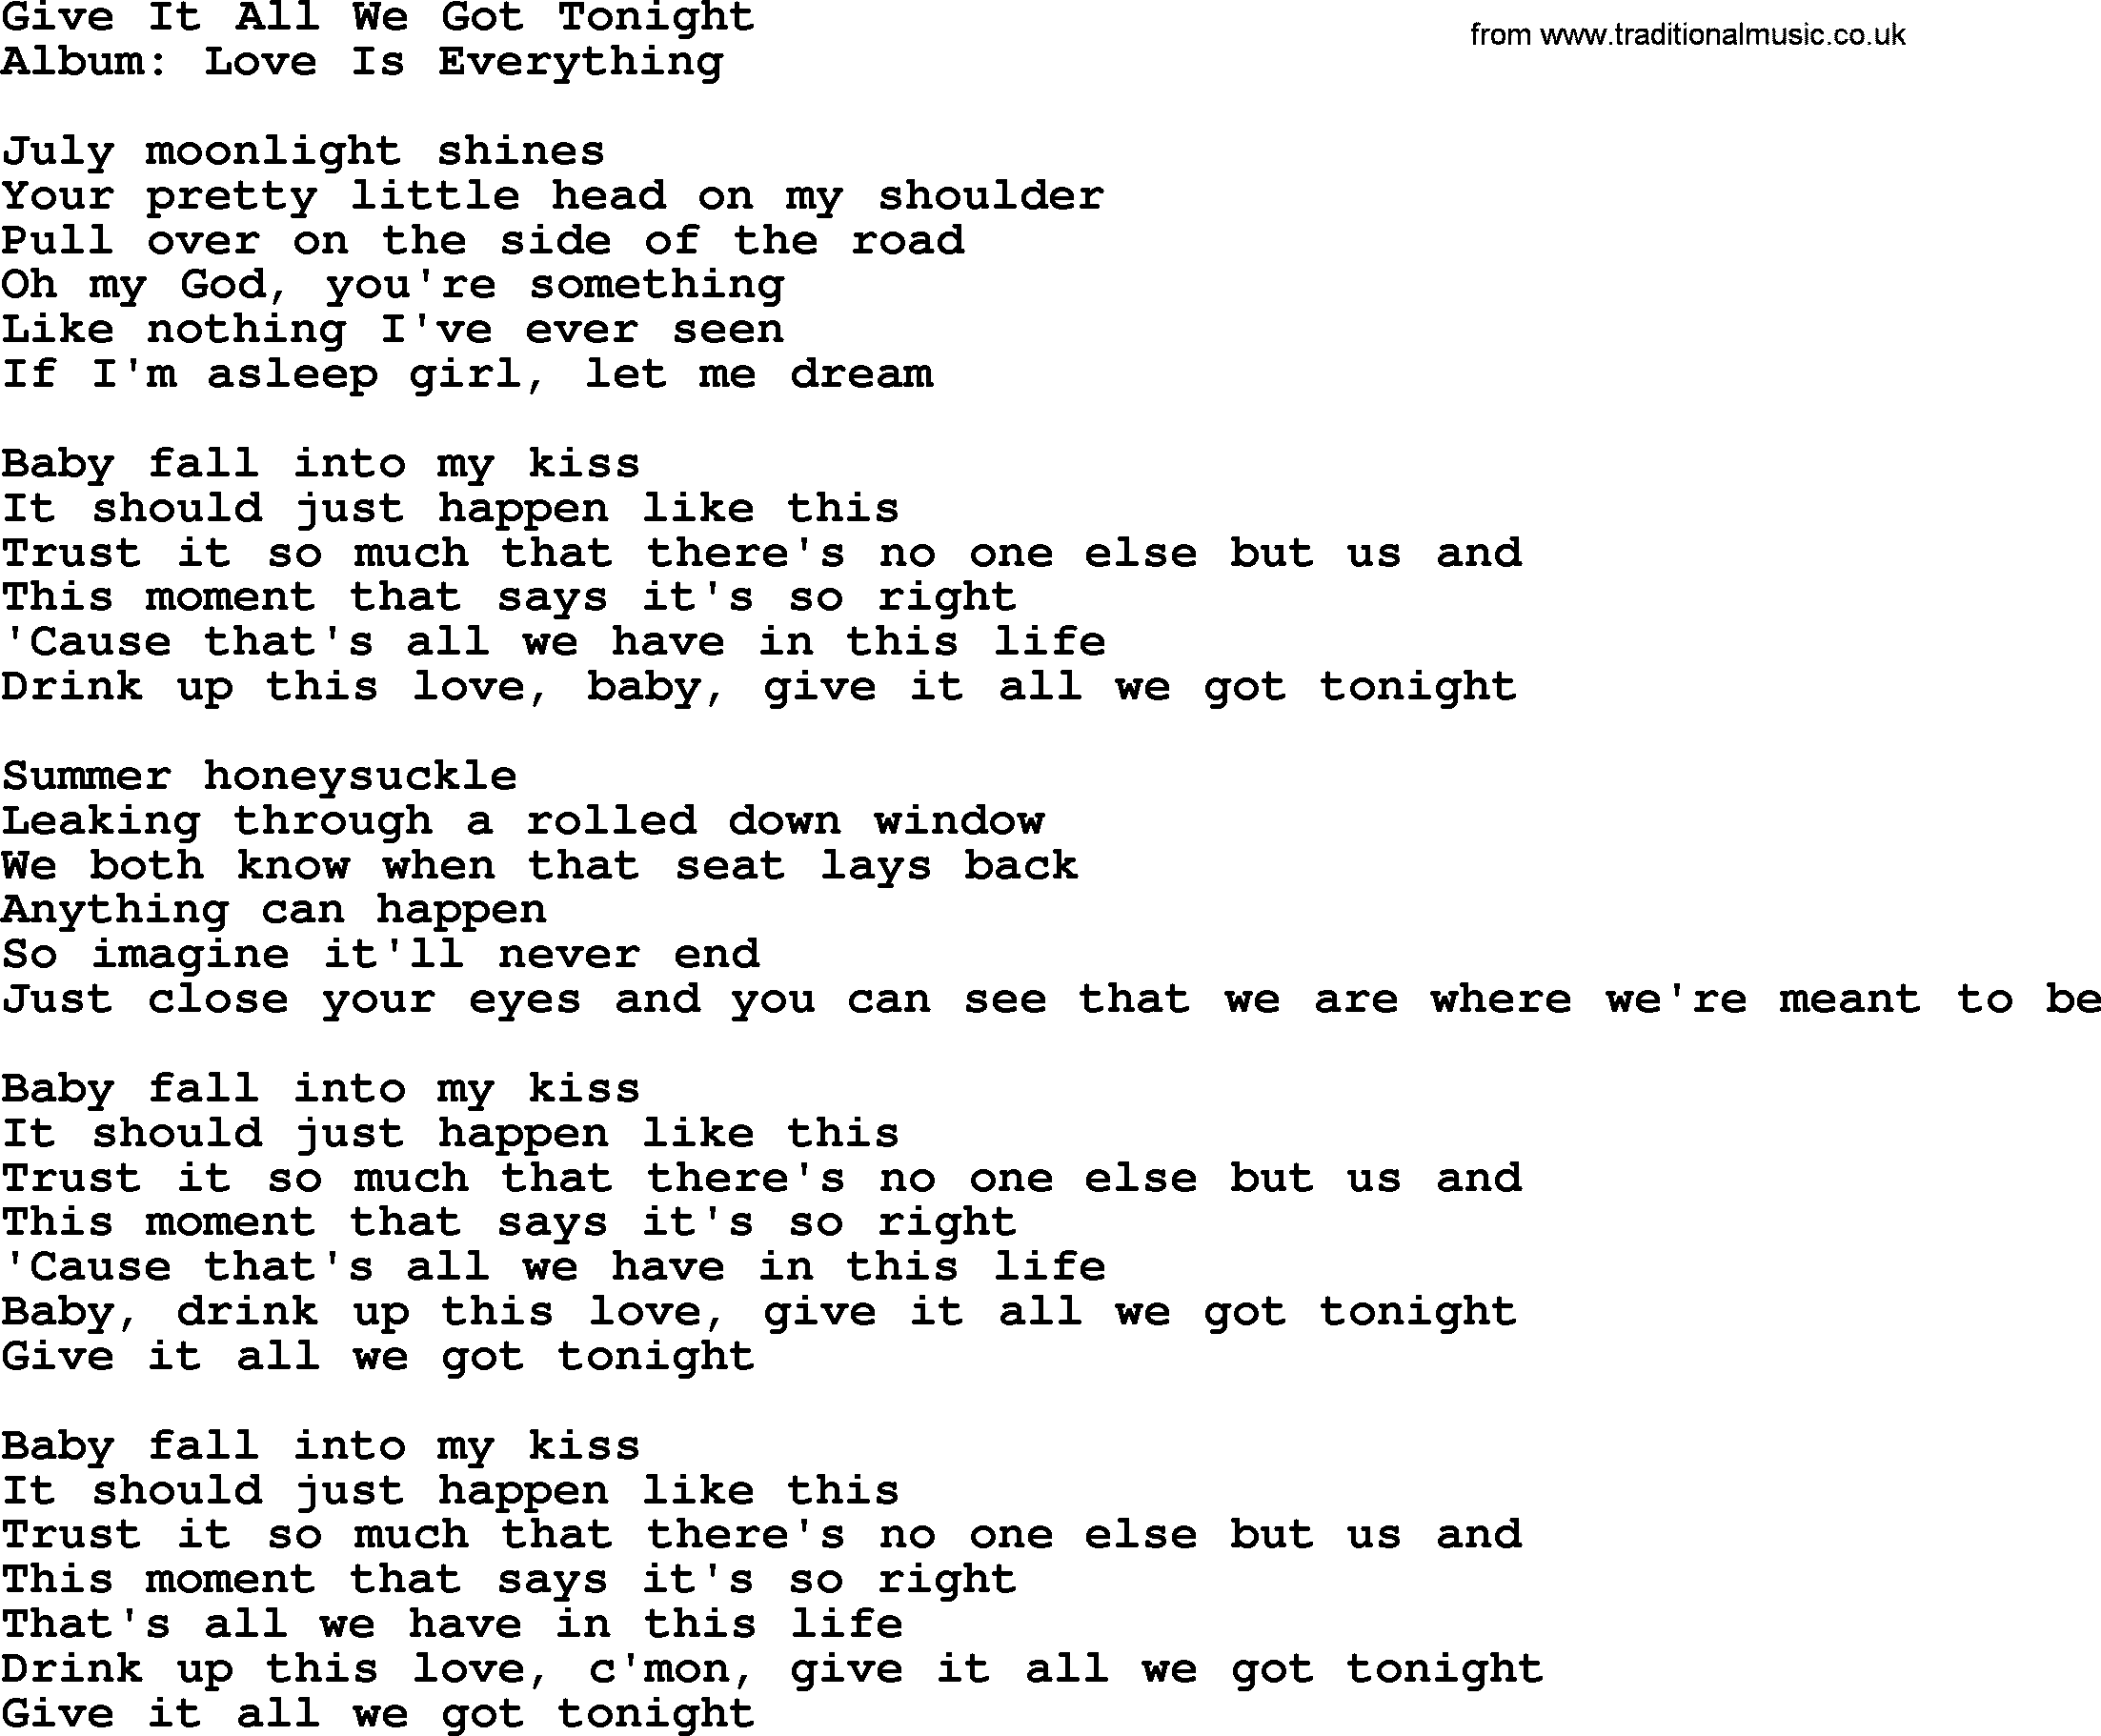 George Strait song: Give It All We Got Tonight, lyrics